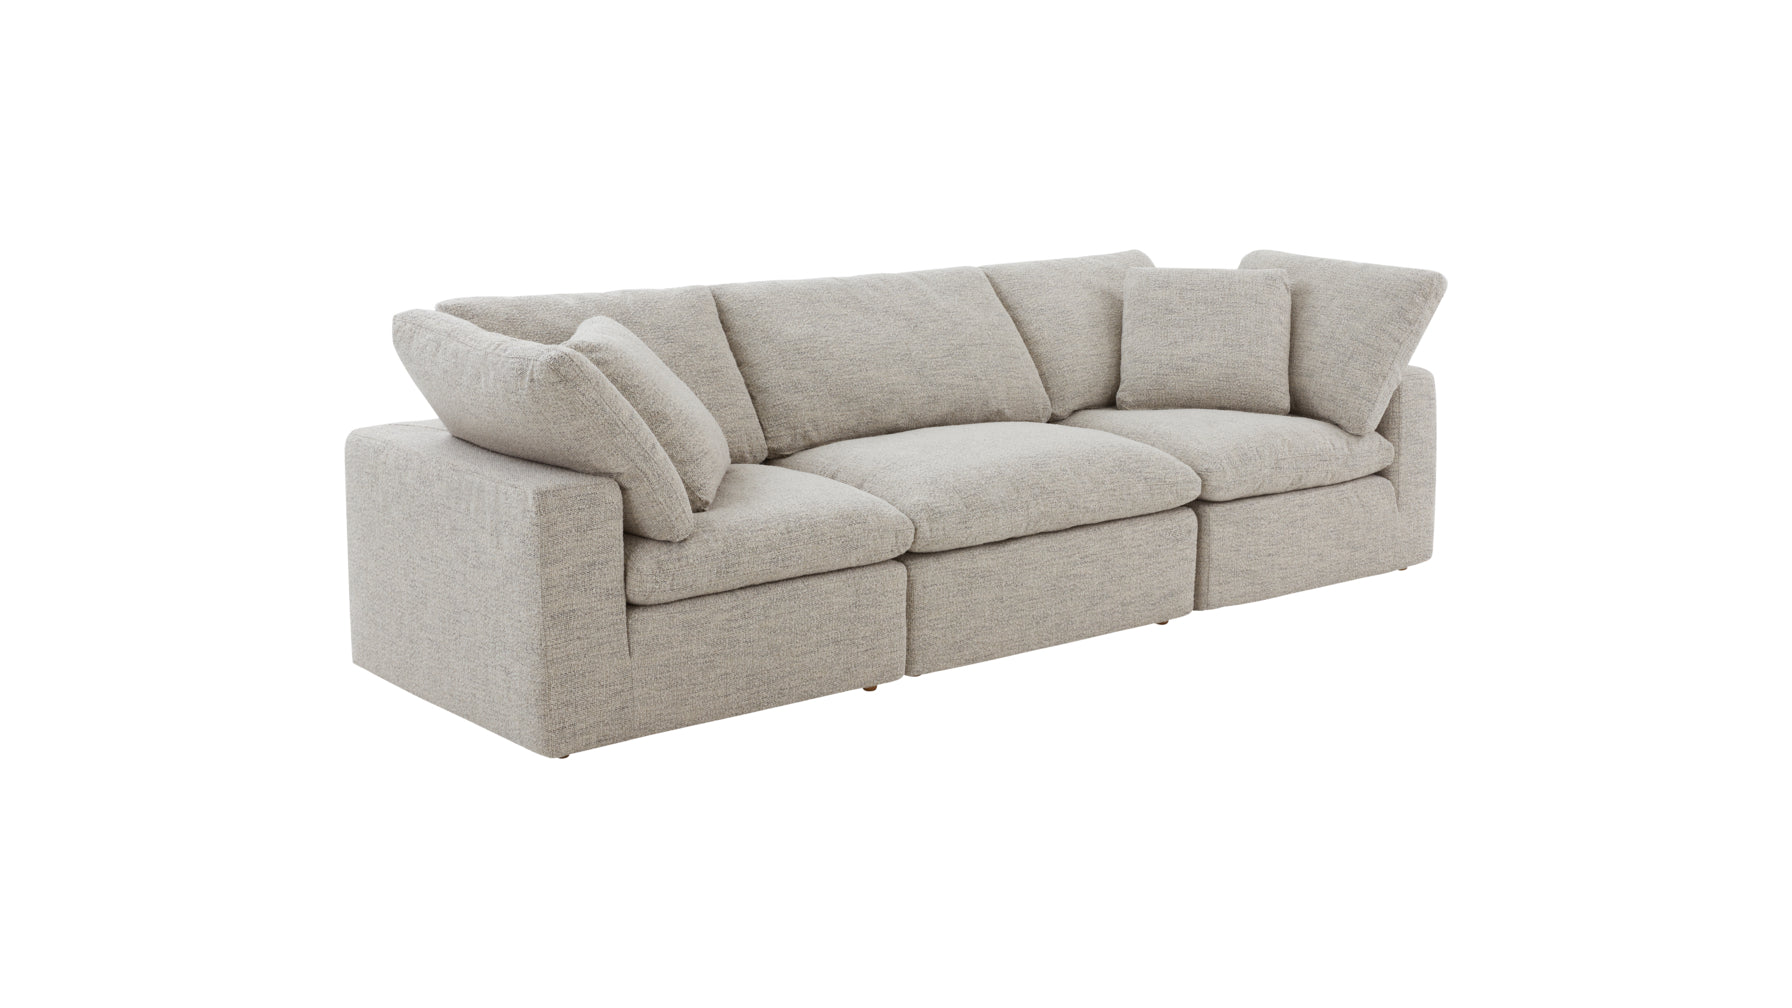 Movie Night™ 3-Piece Modular Sofa, Large, Oatmeal - Image 3